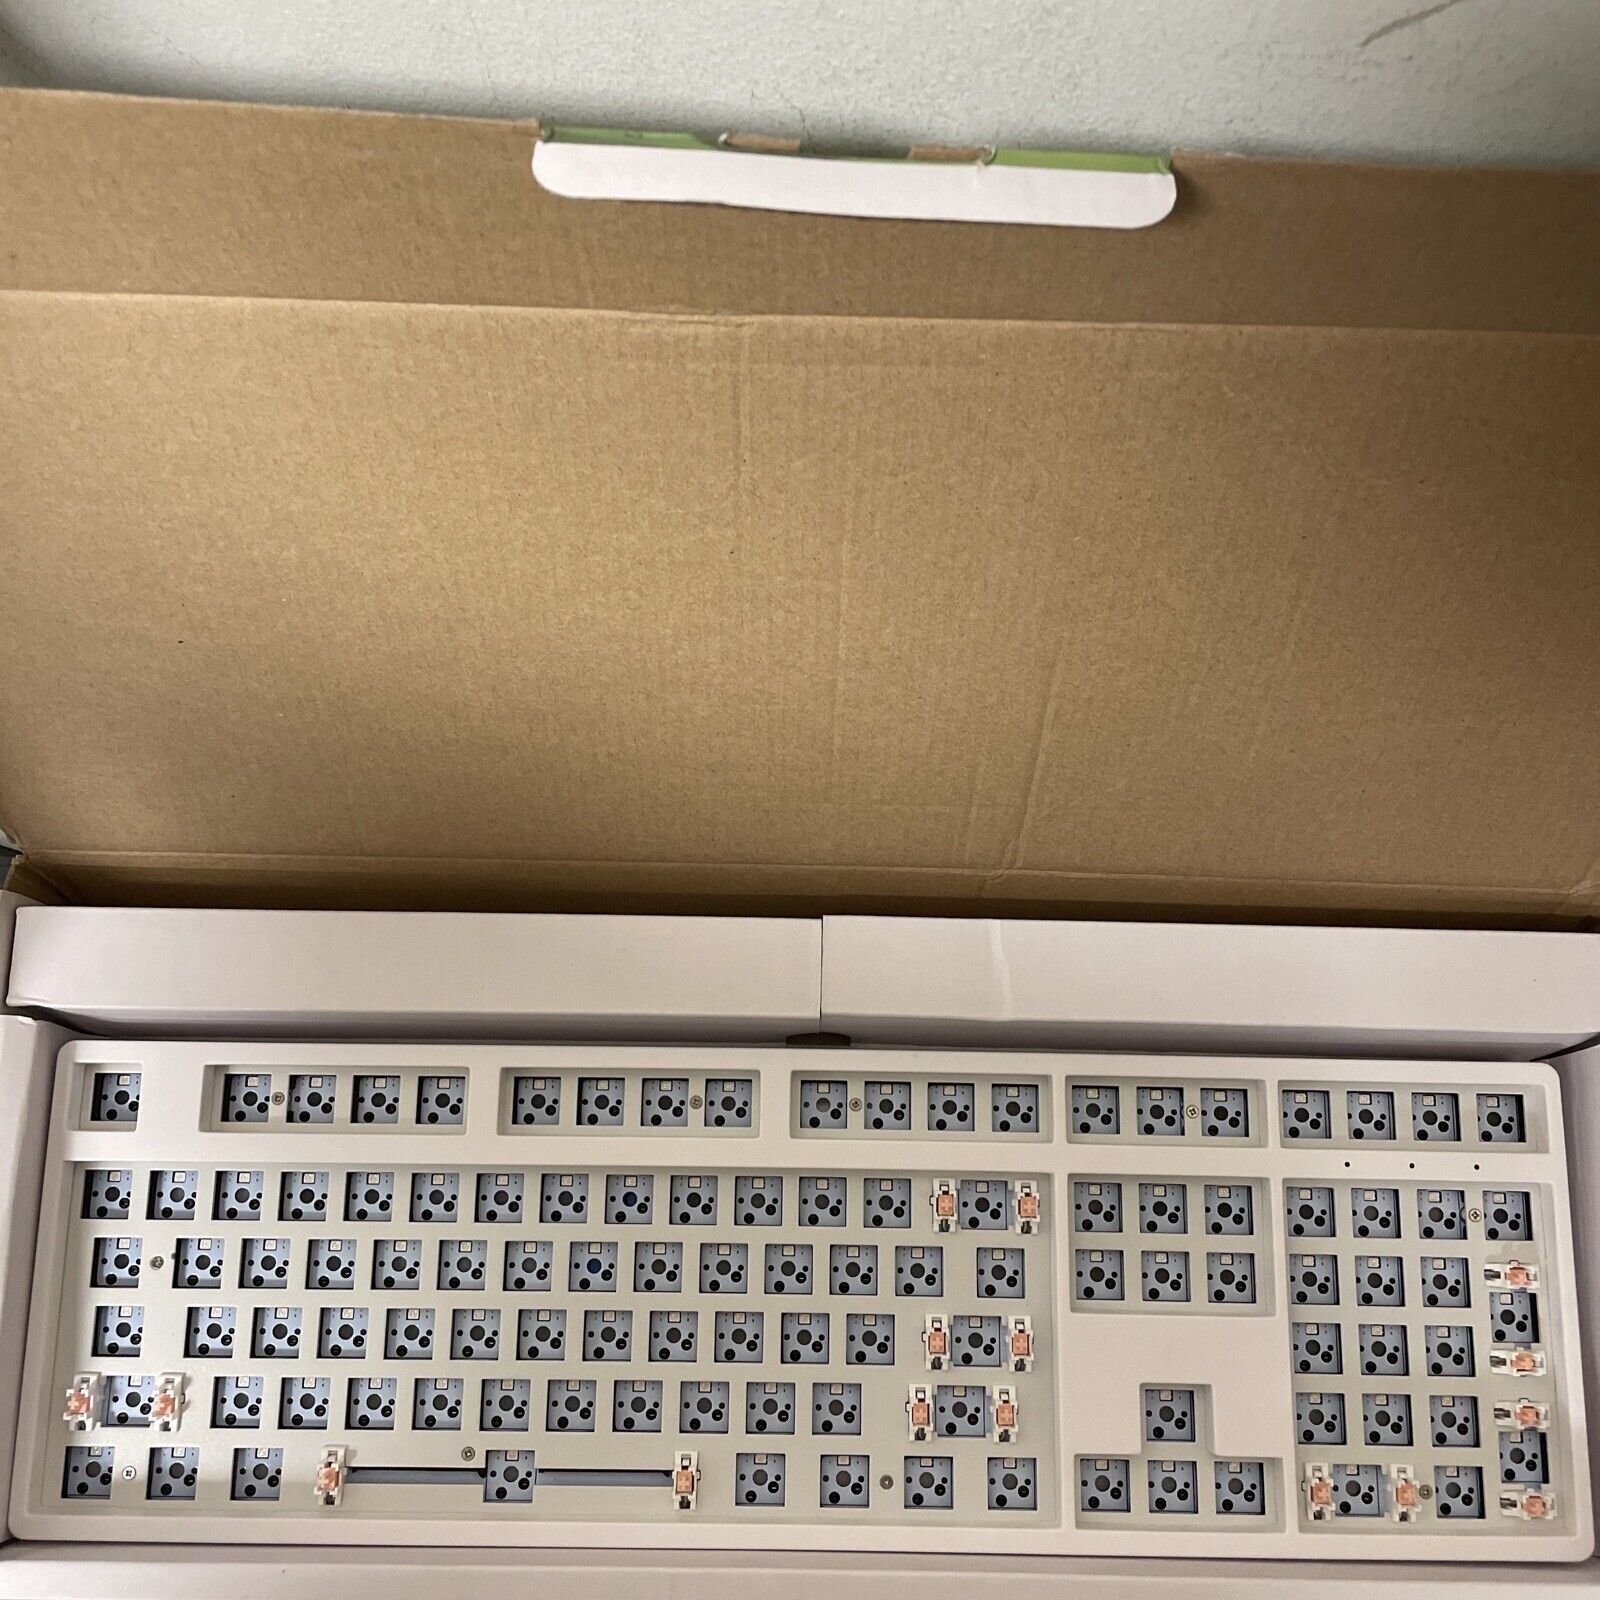 97 KEYS WHITE Customized Mechanical Keyboard Kit 98% Gasket Bluetooth 2.4G Wirel